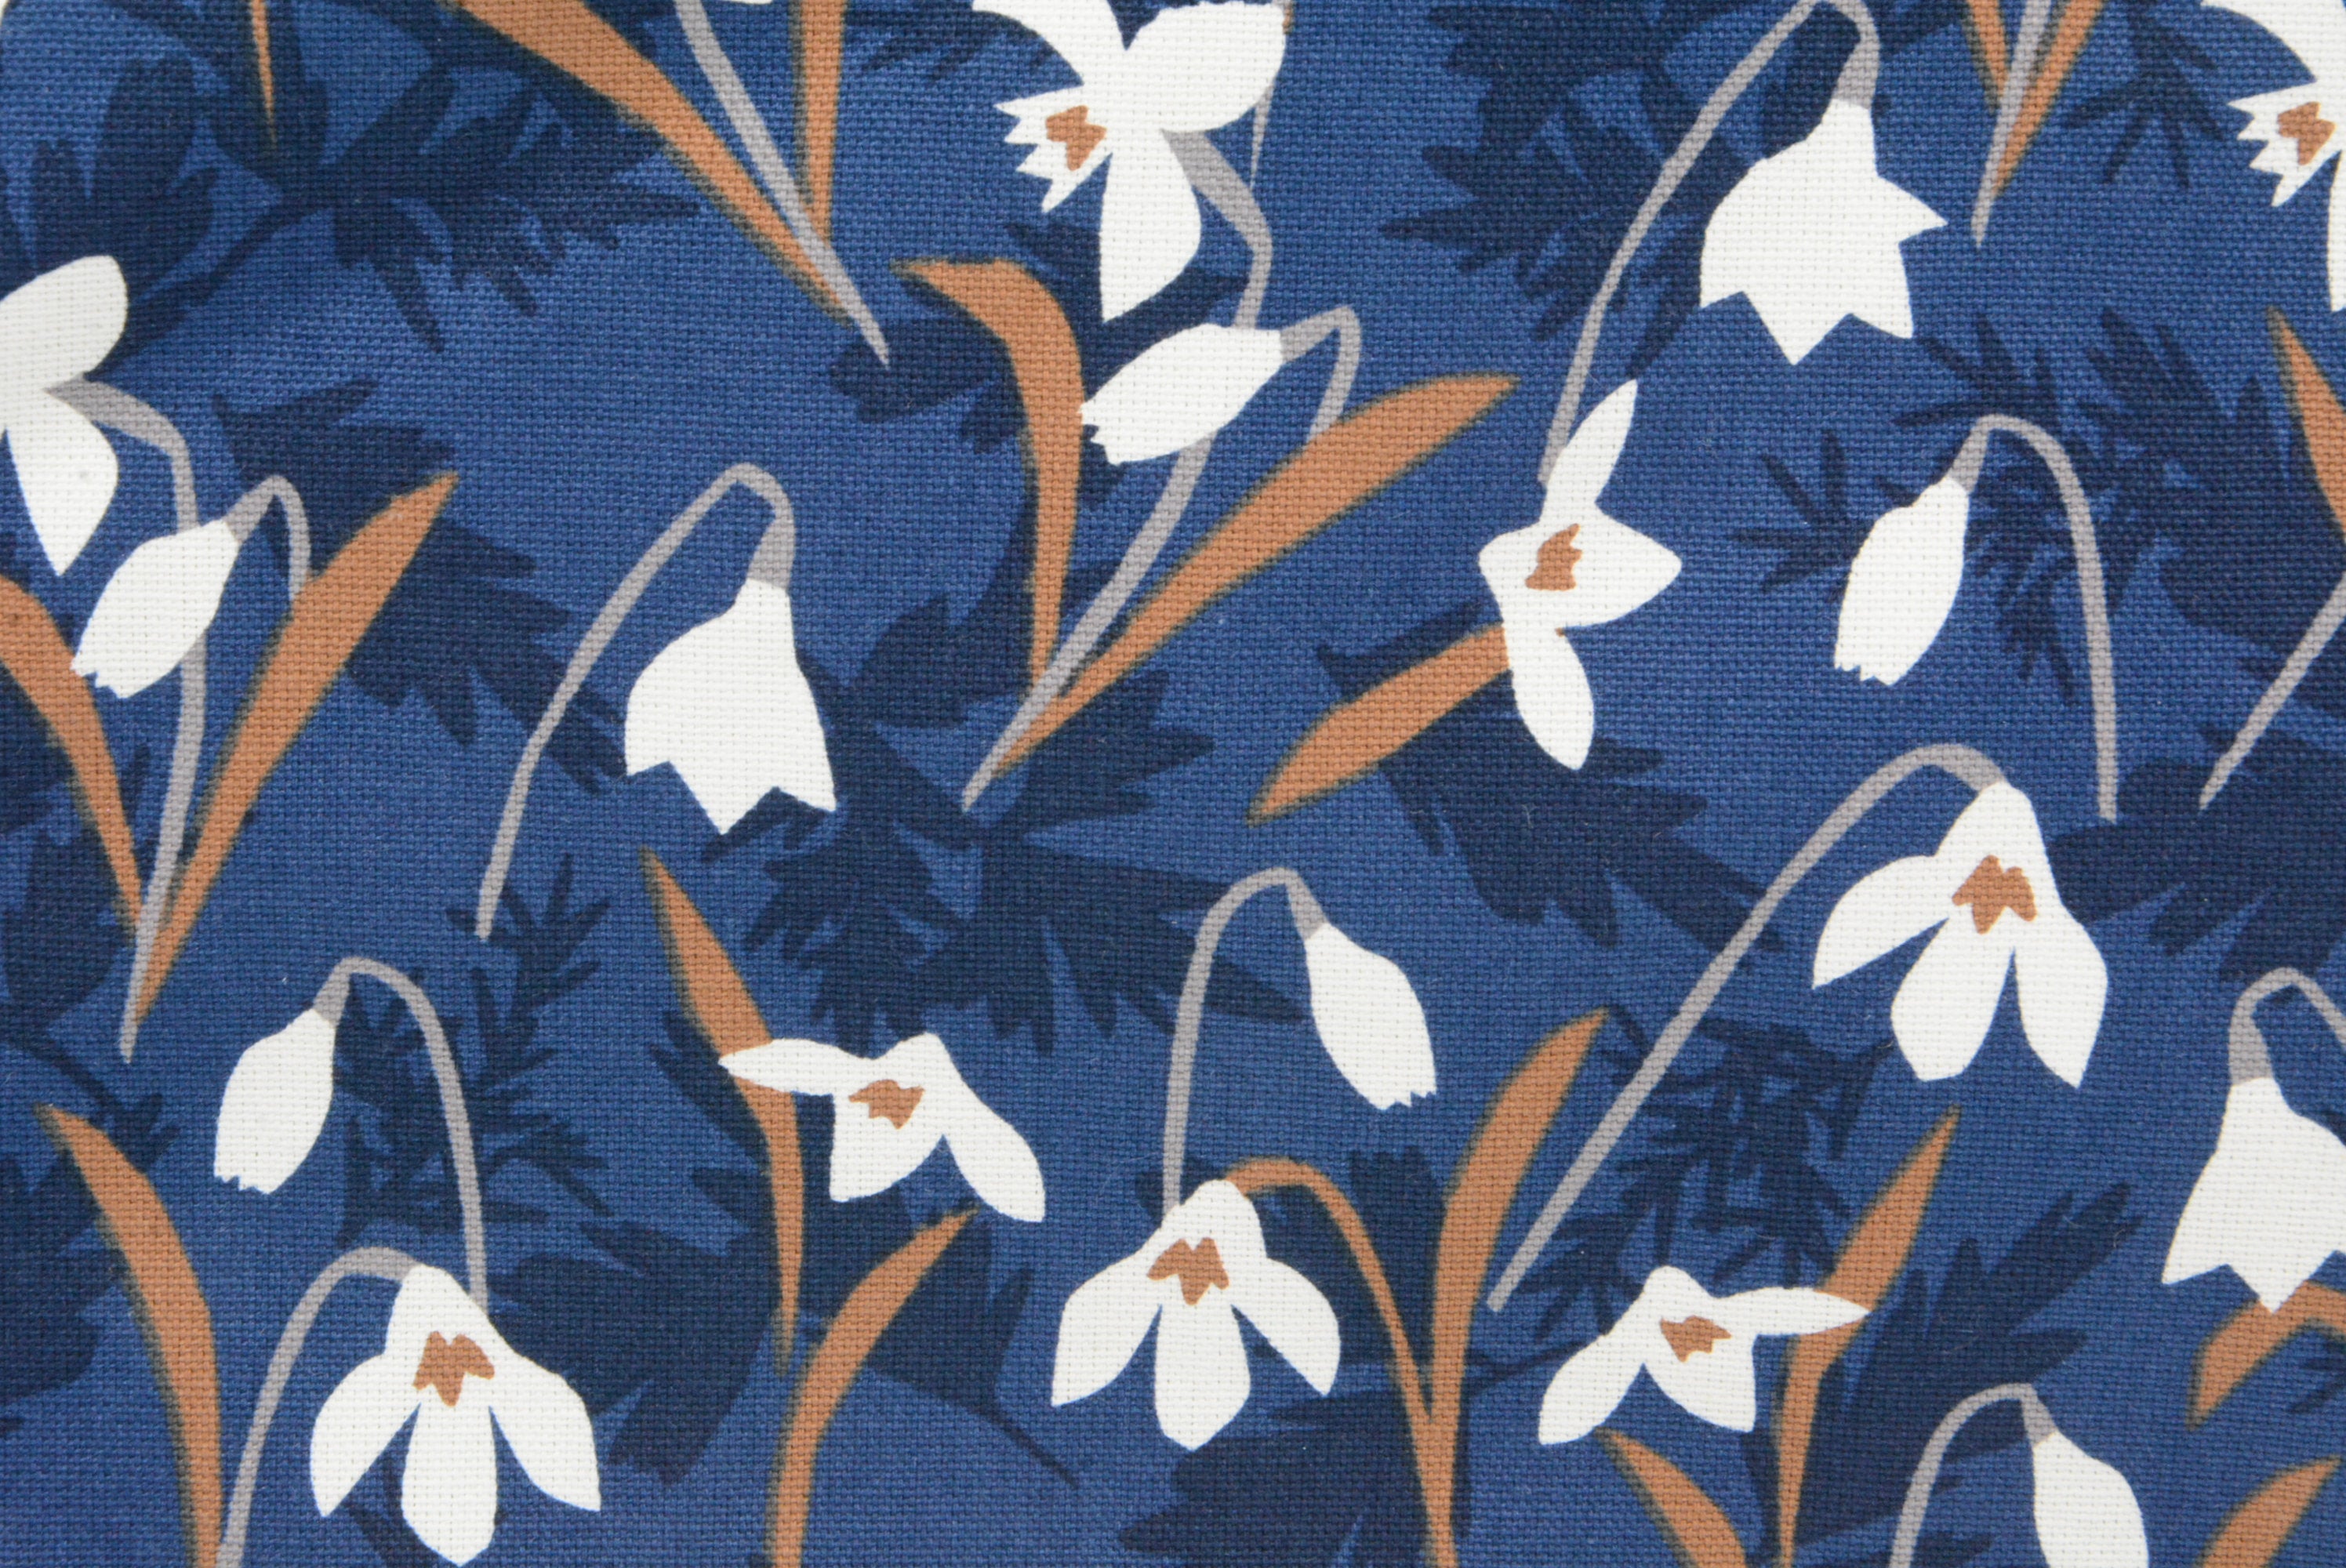 Snowdrop Flowers *Cotton Linen Fabric*